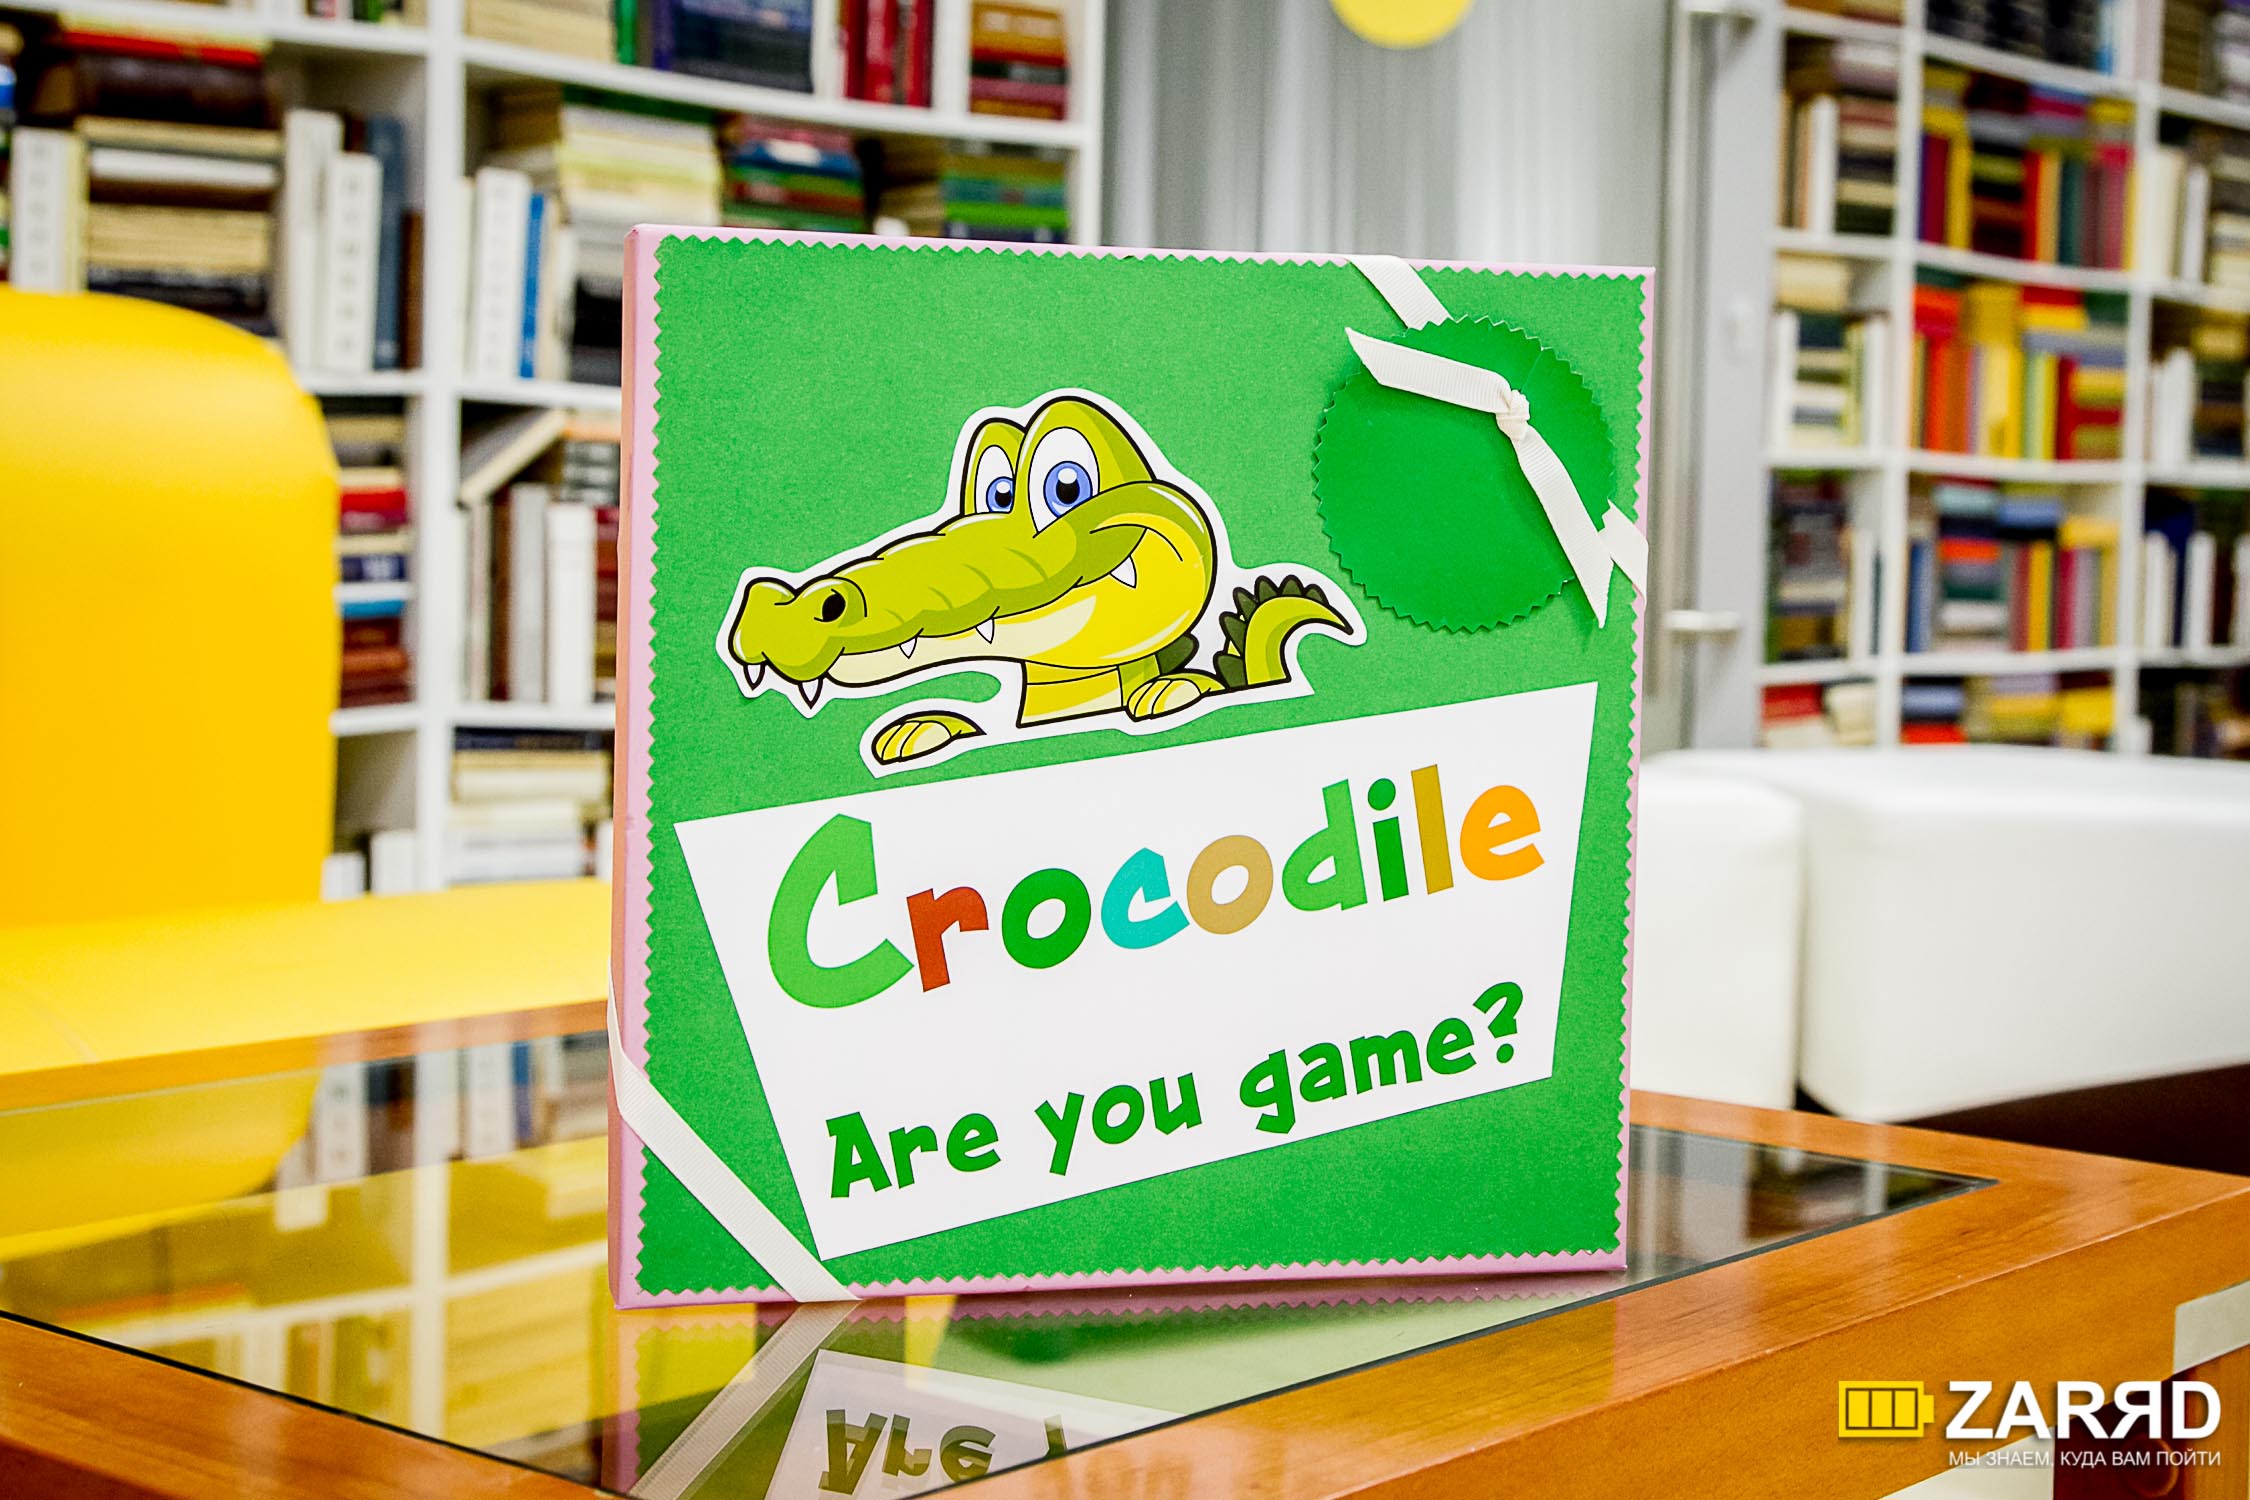 Игра крокодил на английском. Крокодил на английском языке игра. Кафе веселый крокодил Англия. Игра крокодил на англ. Учебник по английскому с крокодилом.